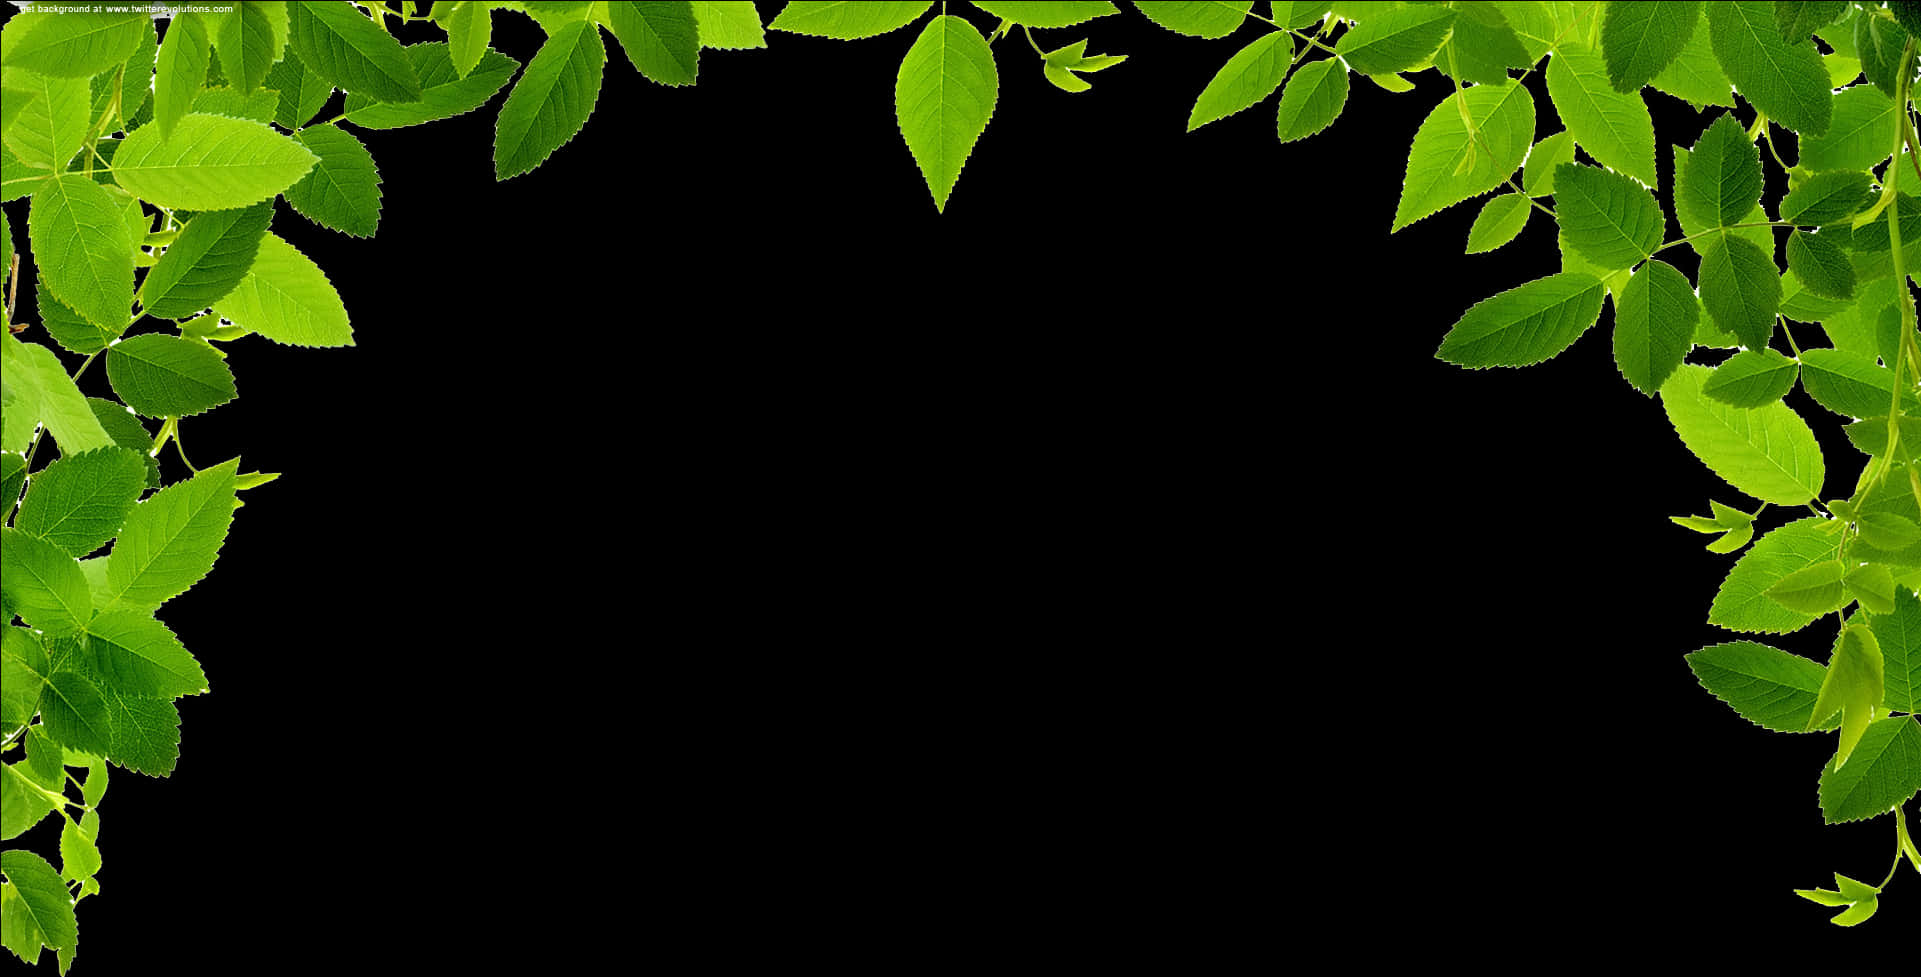 Green Leaf Frameon Black Background.jpg